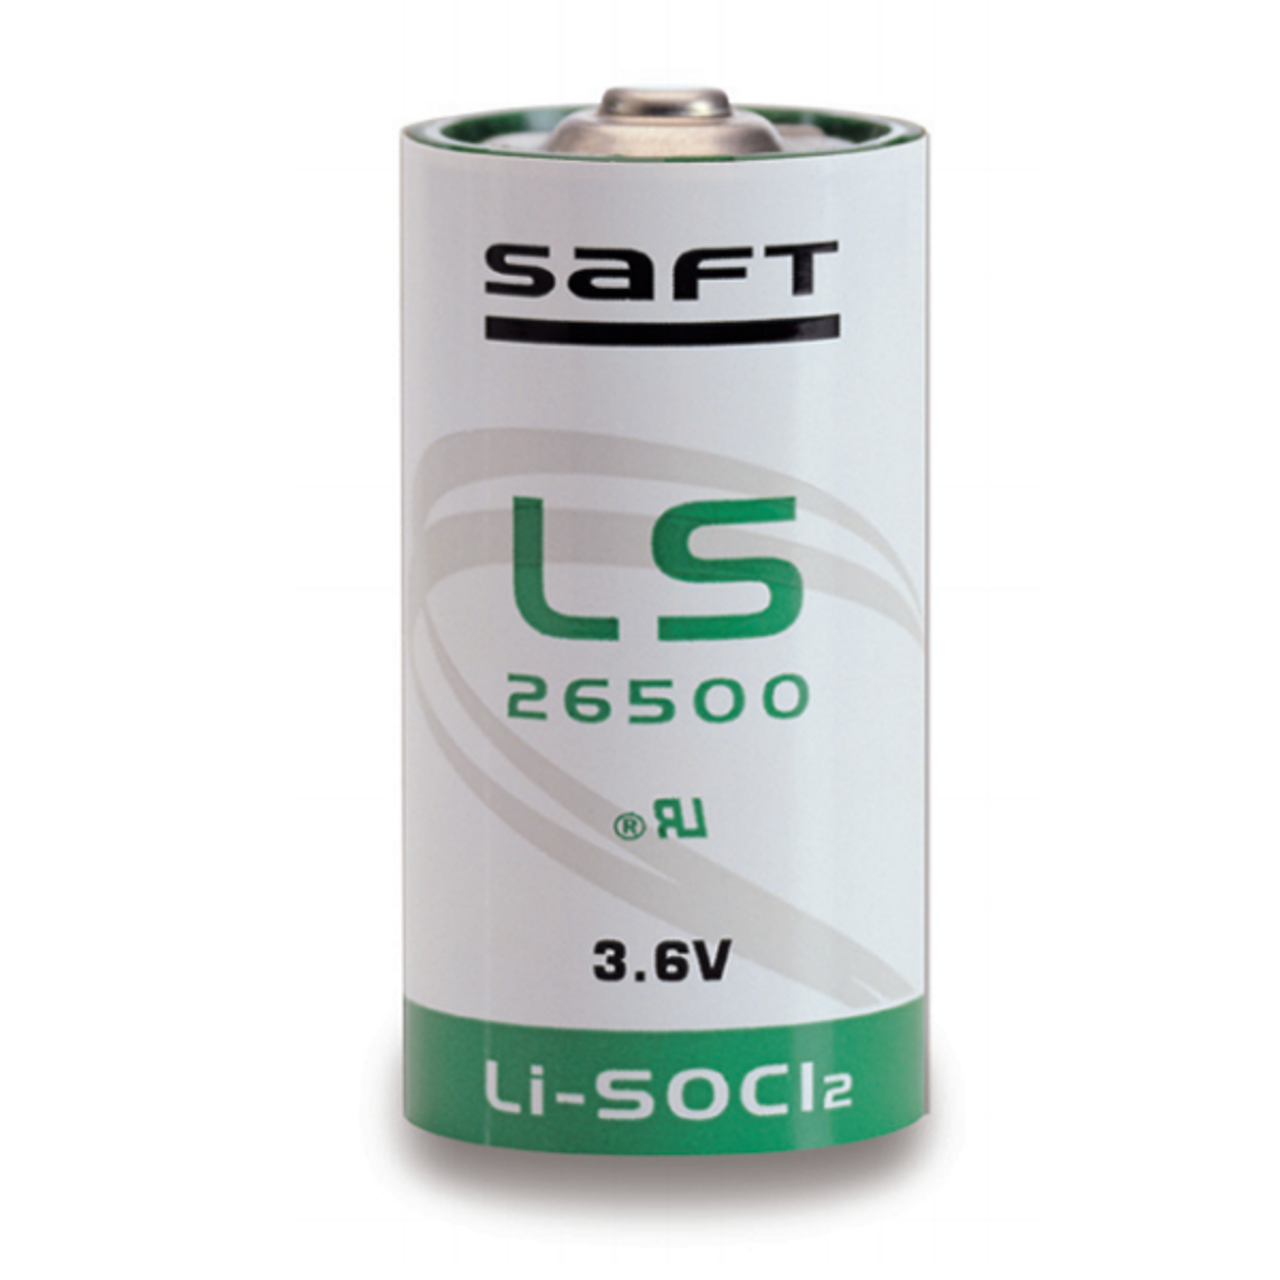 Siemens S5-130K Battery-Simatic S5 Controller-3.6V Lithium C Cell Li-SOCI2 Lithium Sulfer Dioxide